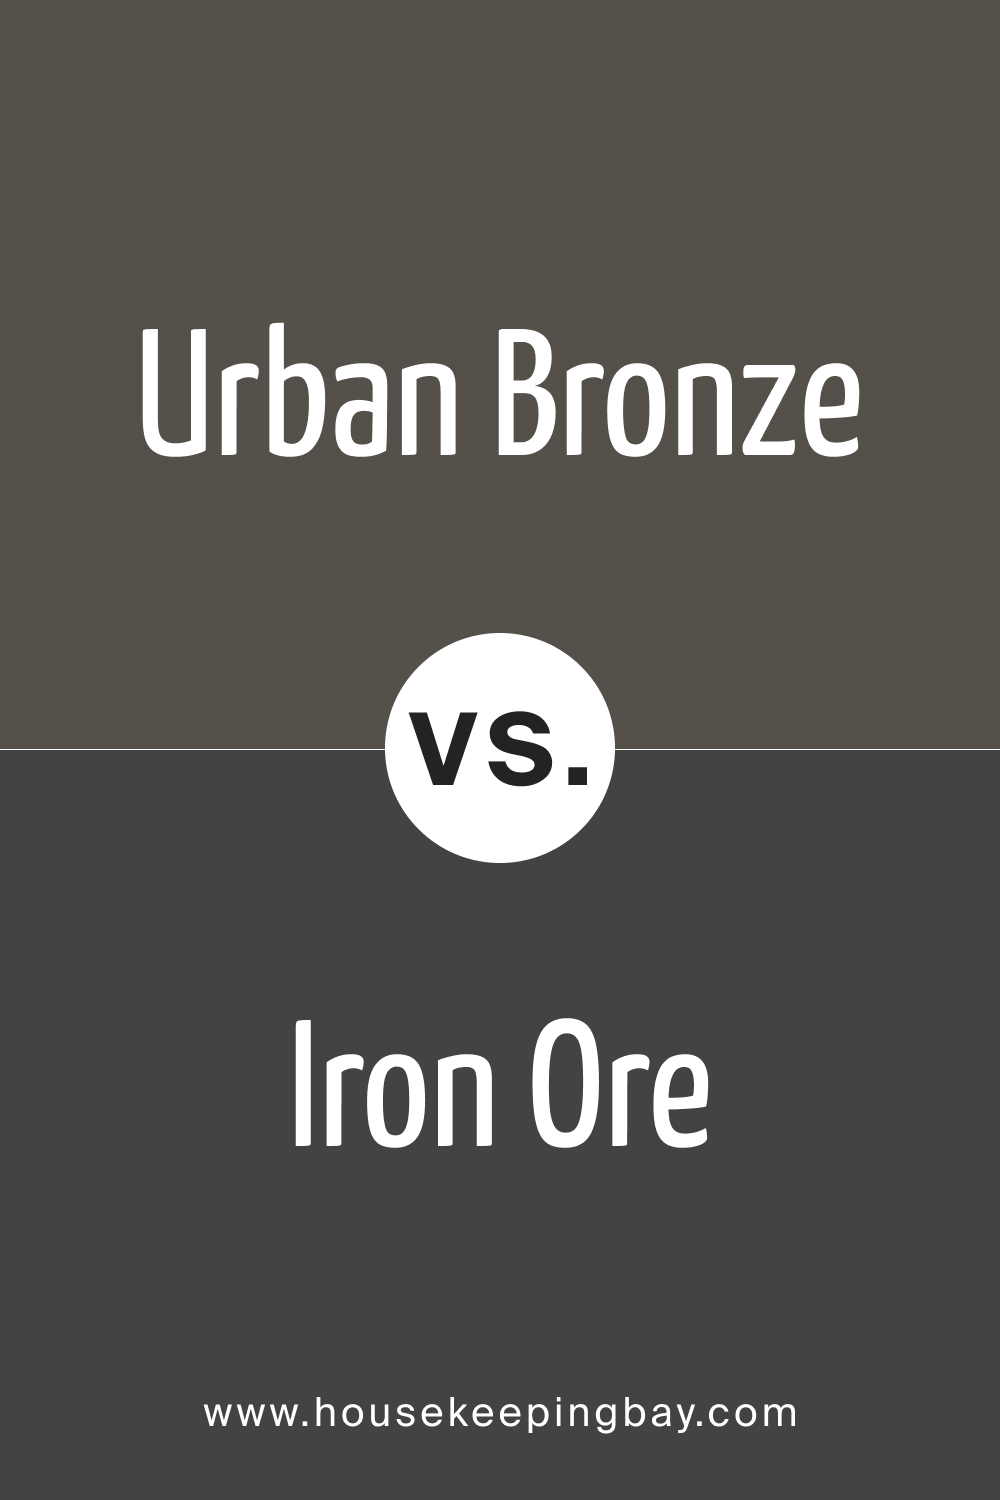 Urban Bronze Paint color vs Iron one